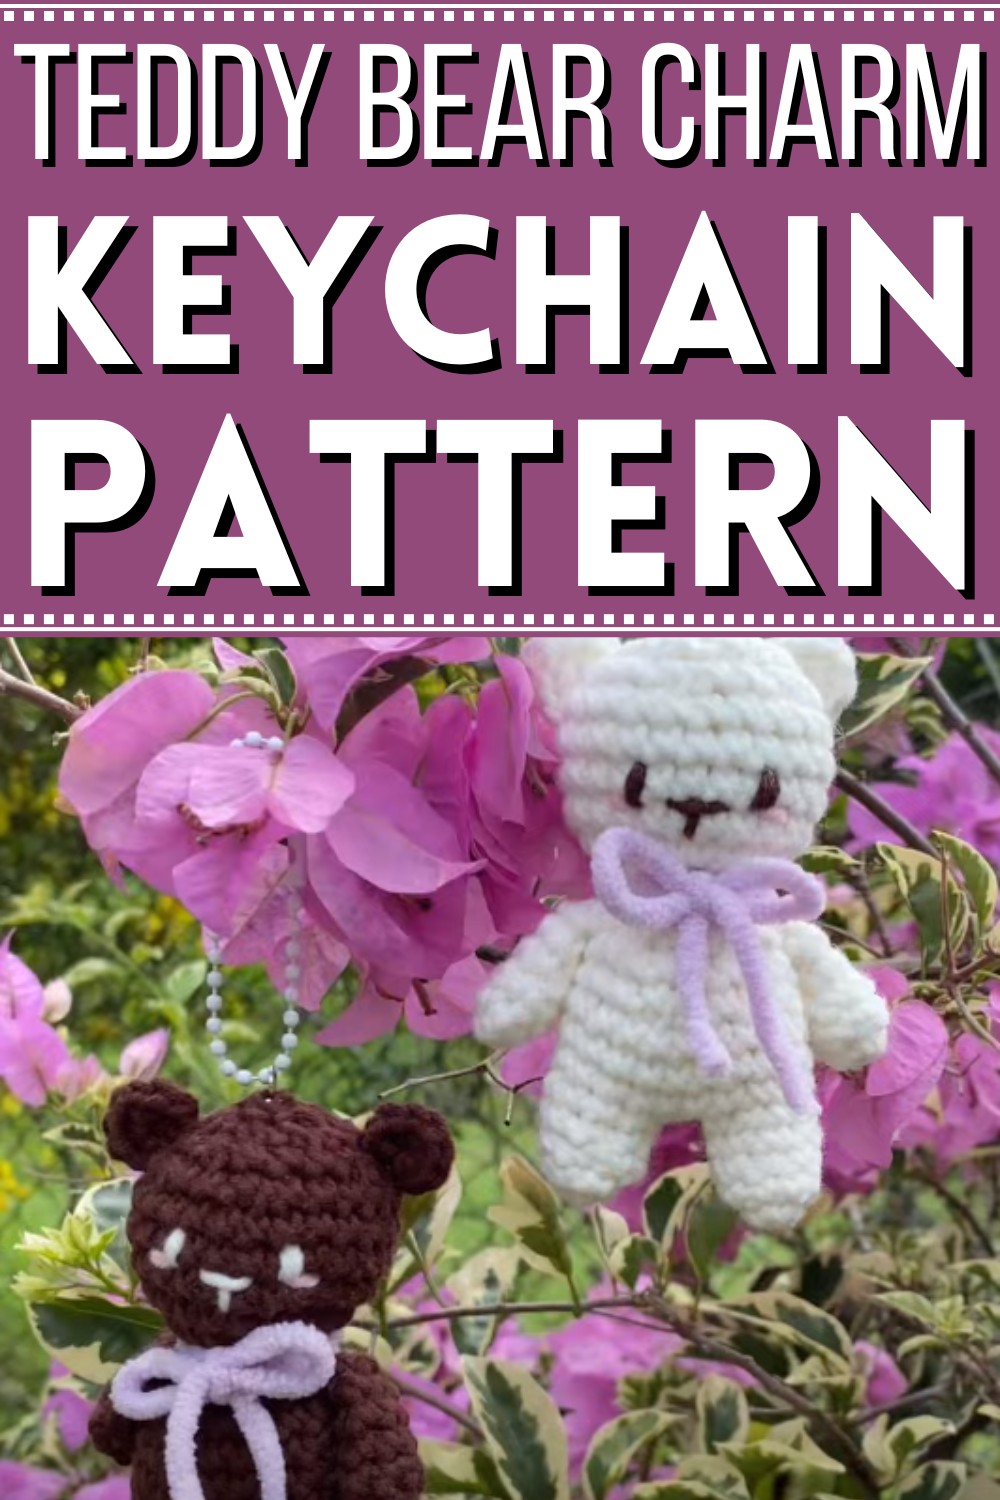 How To Crochet Teddy Bear Charm Keychain For Free